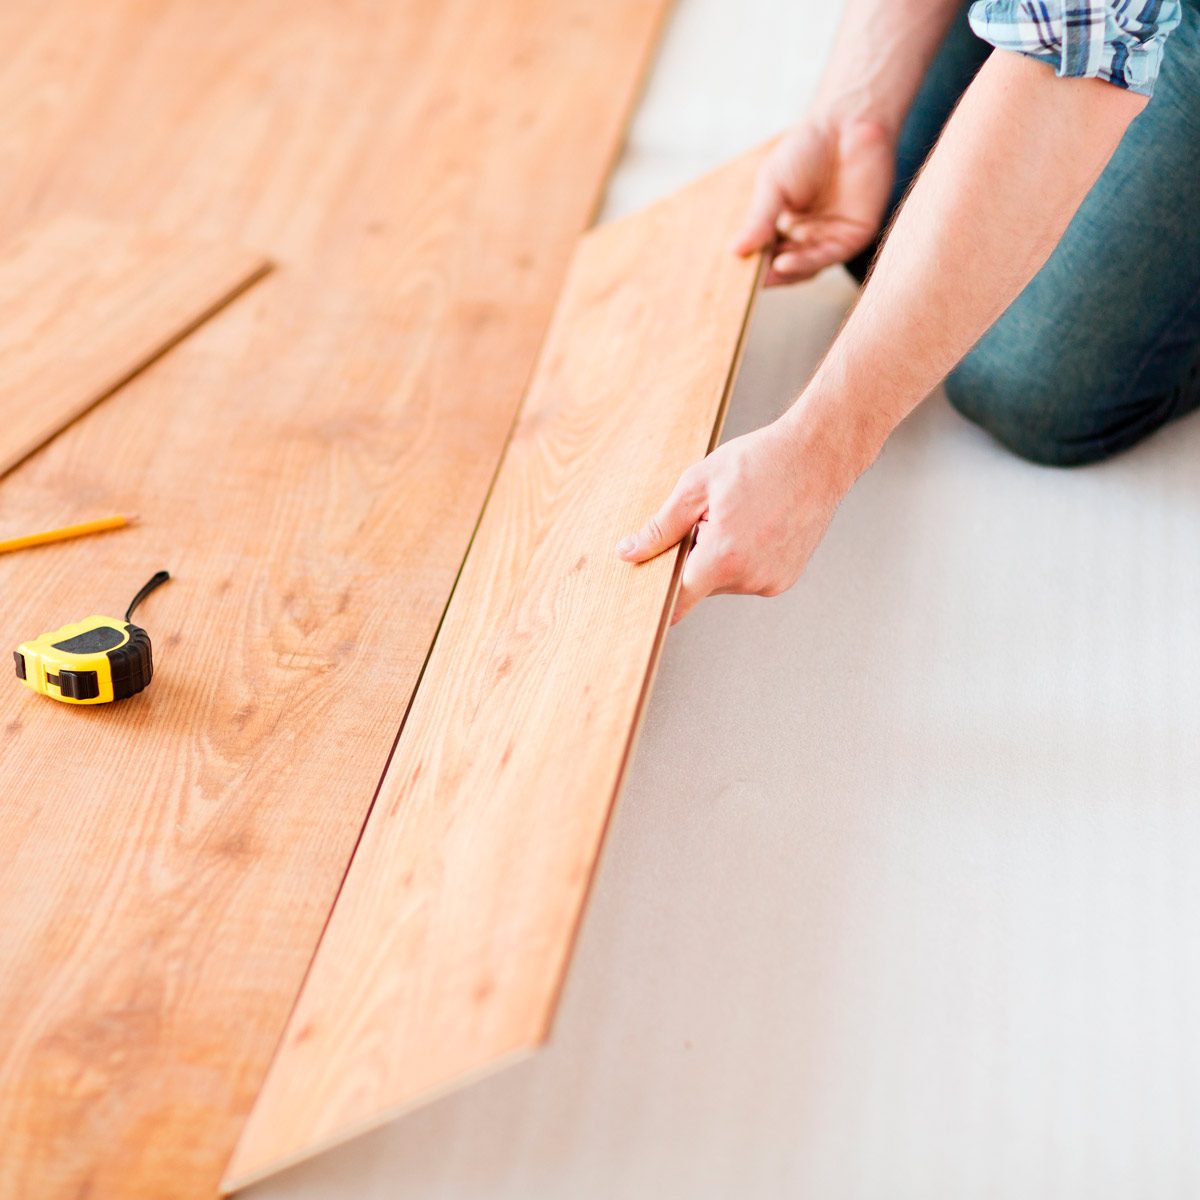 Best Flooring For Increasing Home Value, Do Hardwood Floors Increase Home Value